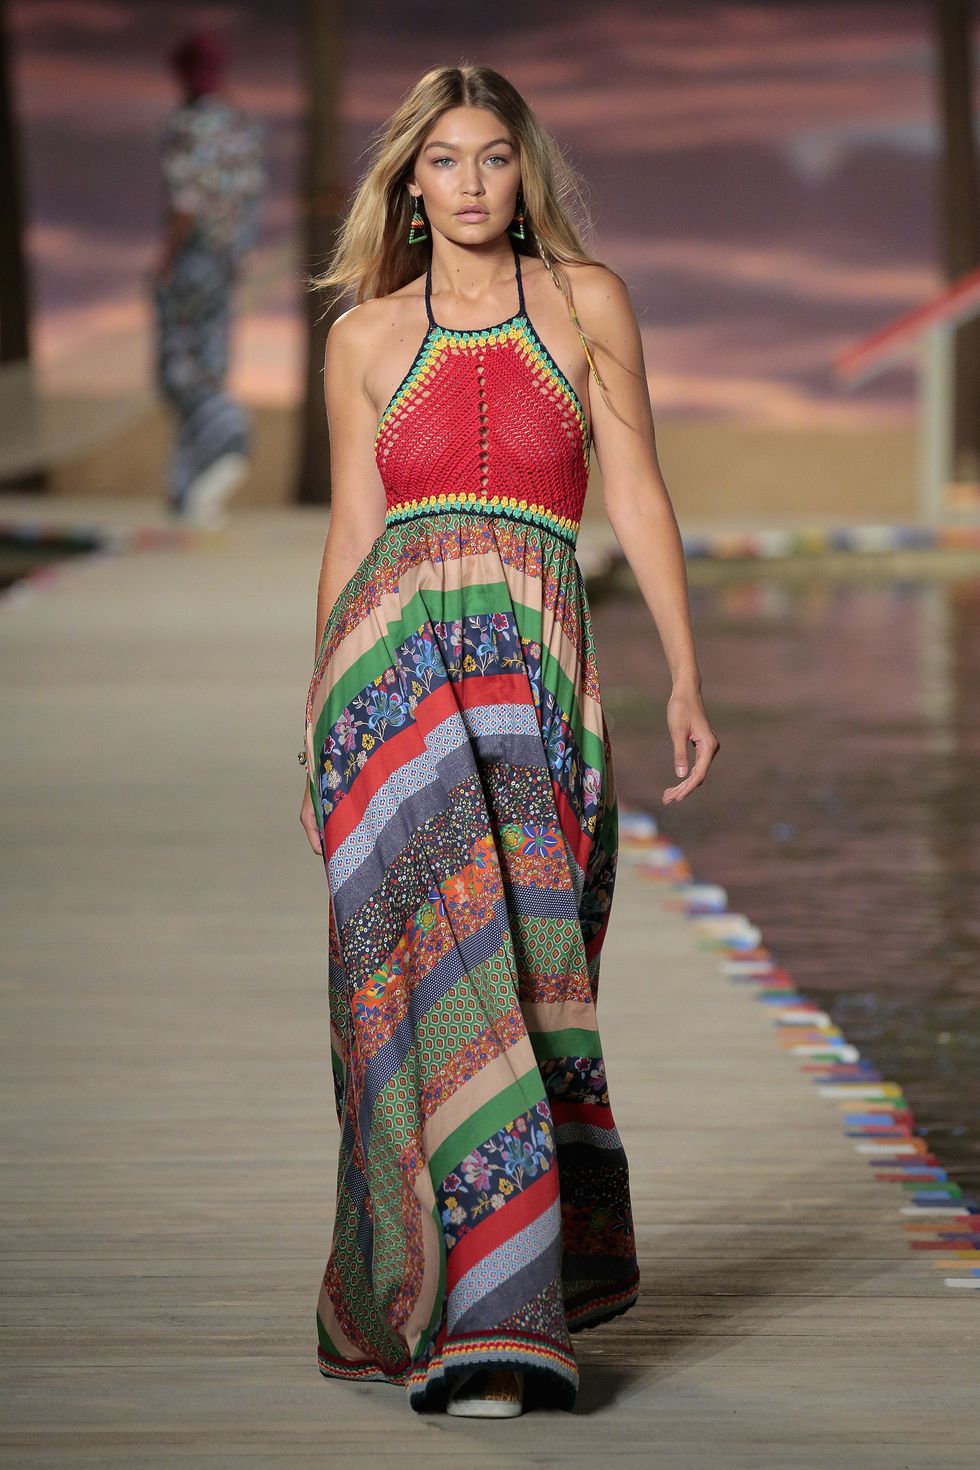 Gigi Hadid wearing a crochet maxi dress at Tommy Hilfiger